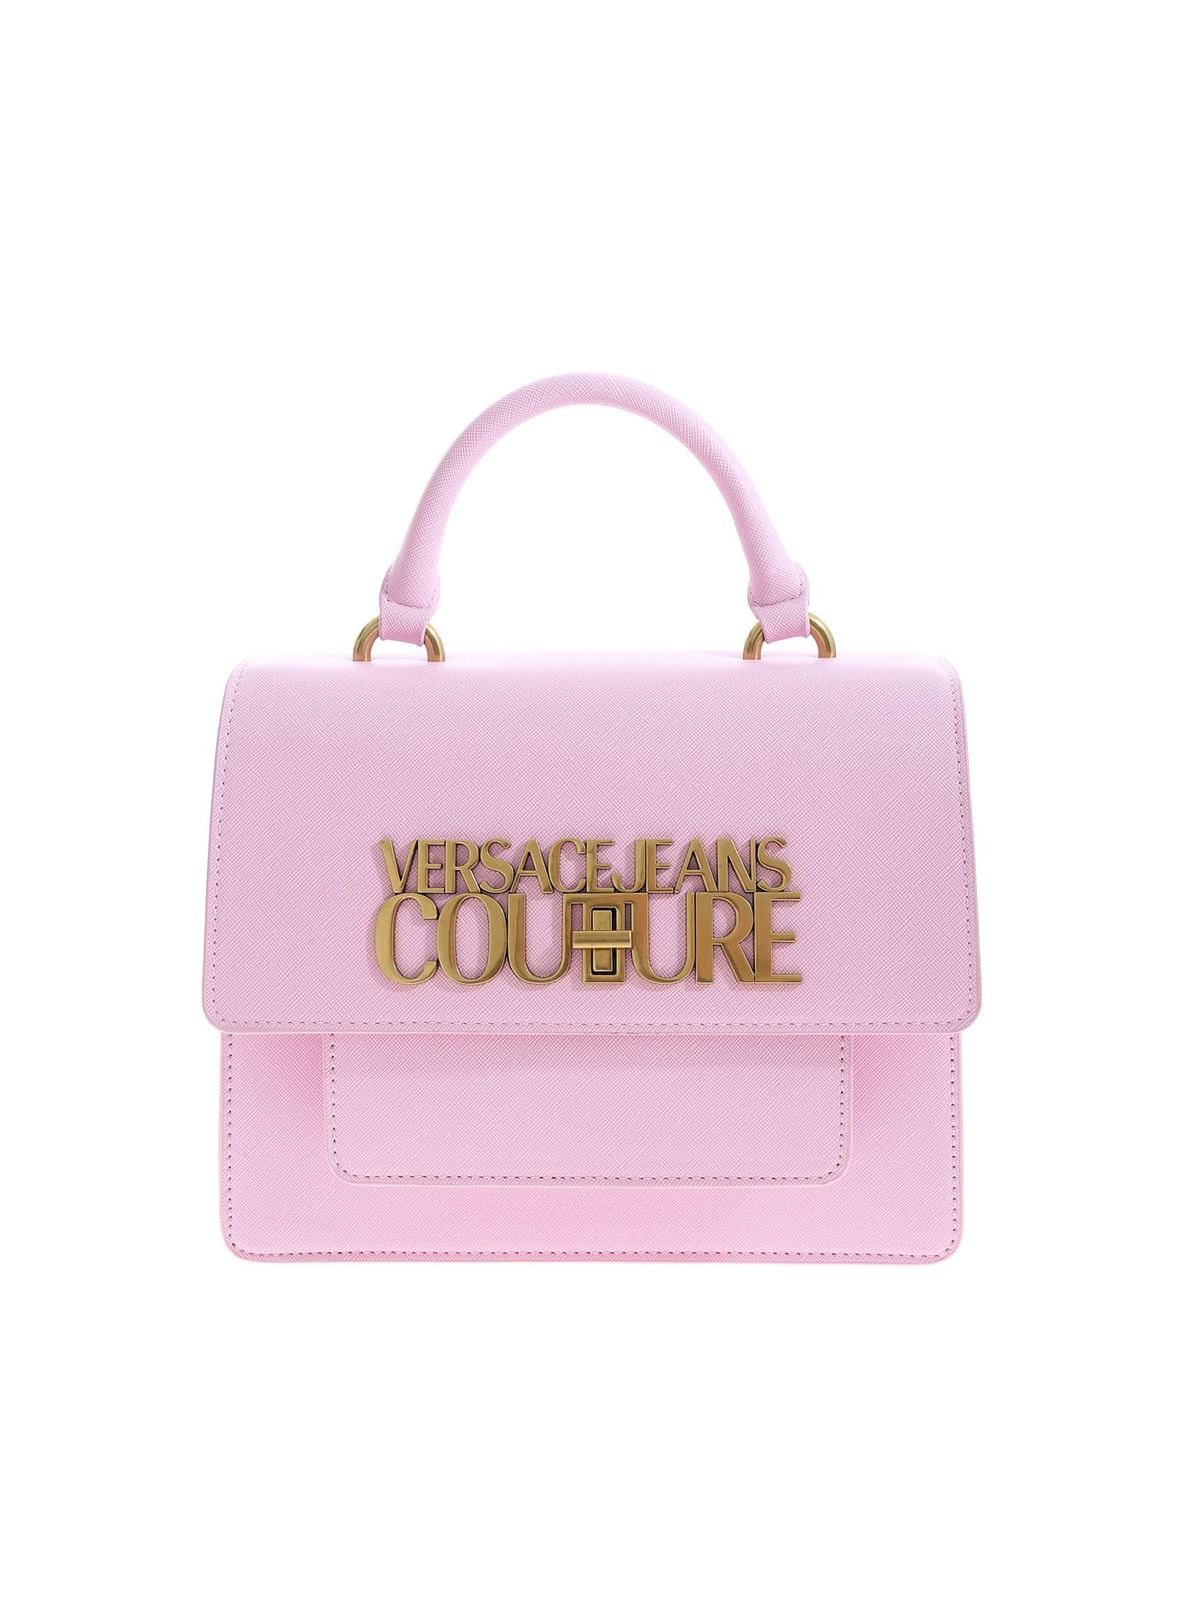 Totes bags Versace Jeans Couture - Logo handbag in pink - E1VWABL571879426